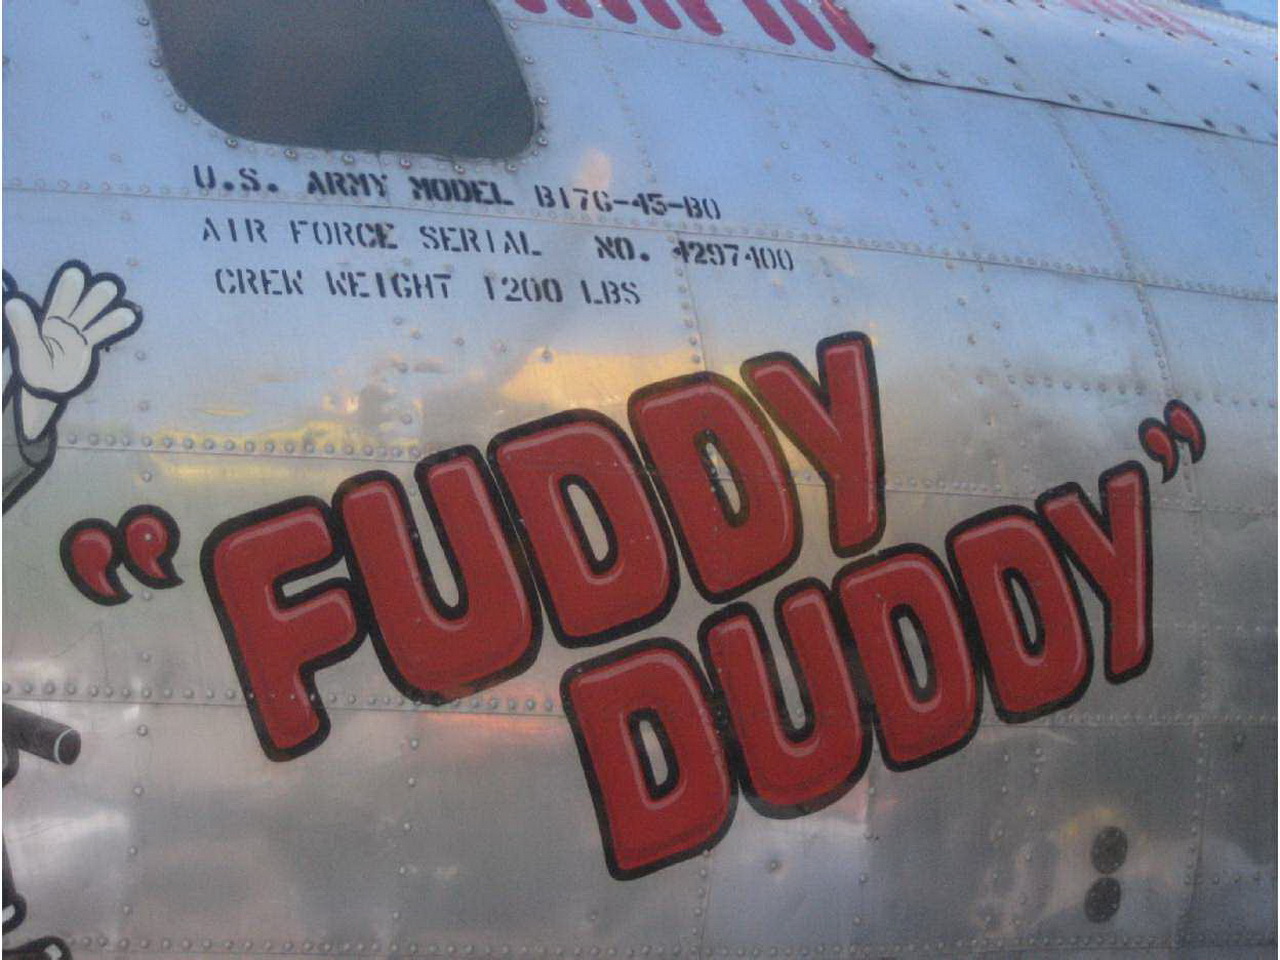 b-17 bomber fuddy duddy nose art